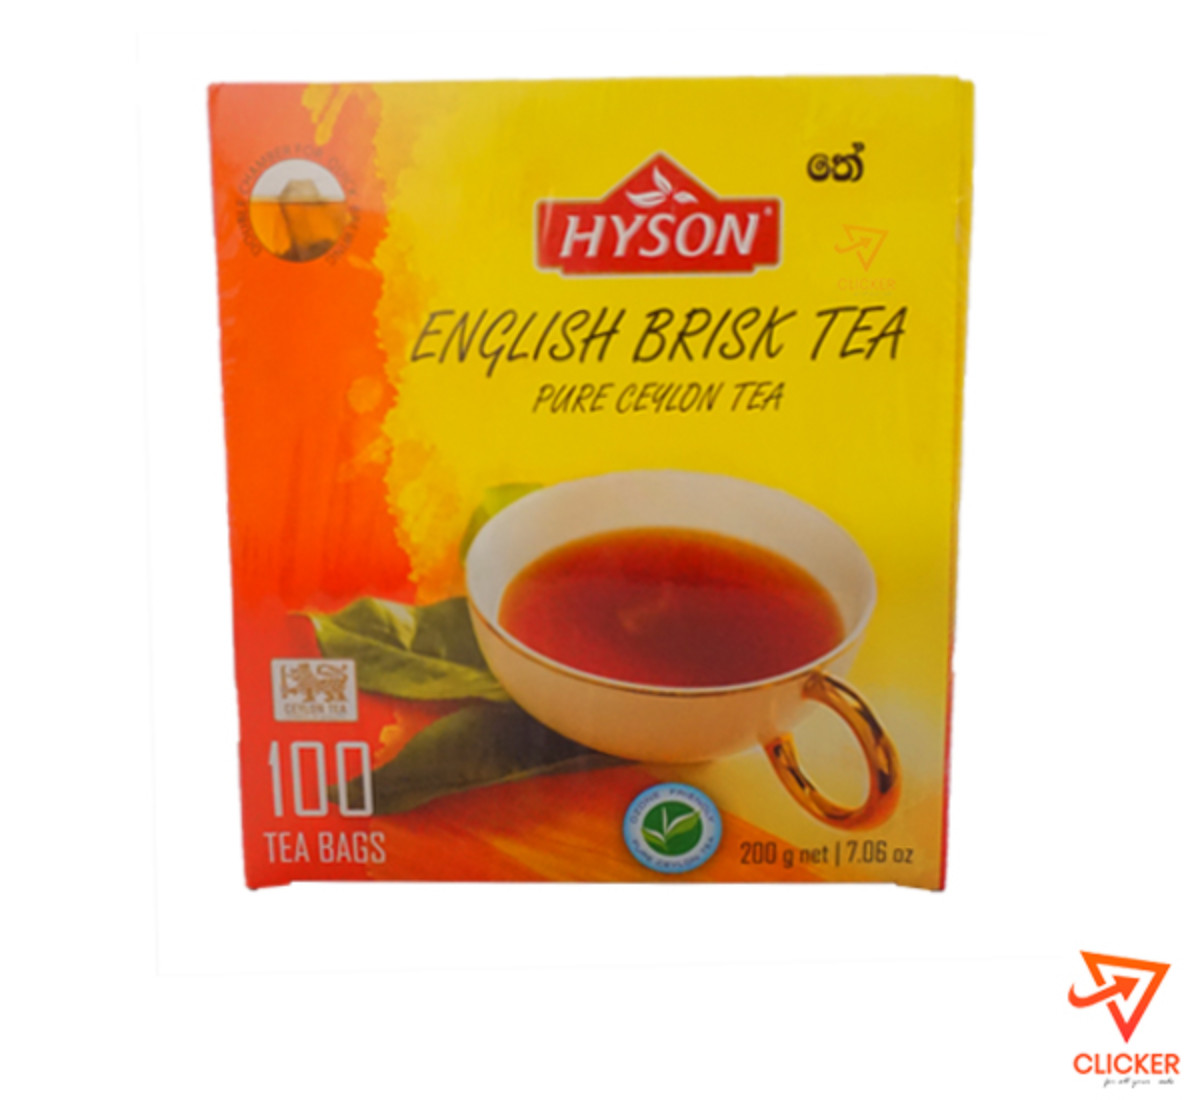 Clicker product 200g HYSON  english brisk tea(100 tea bags) 946